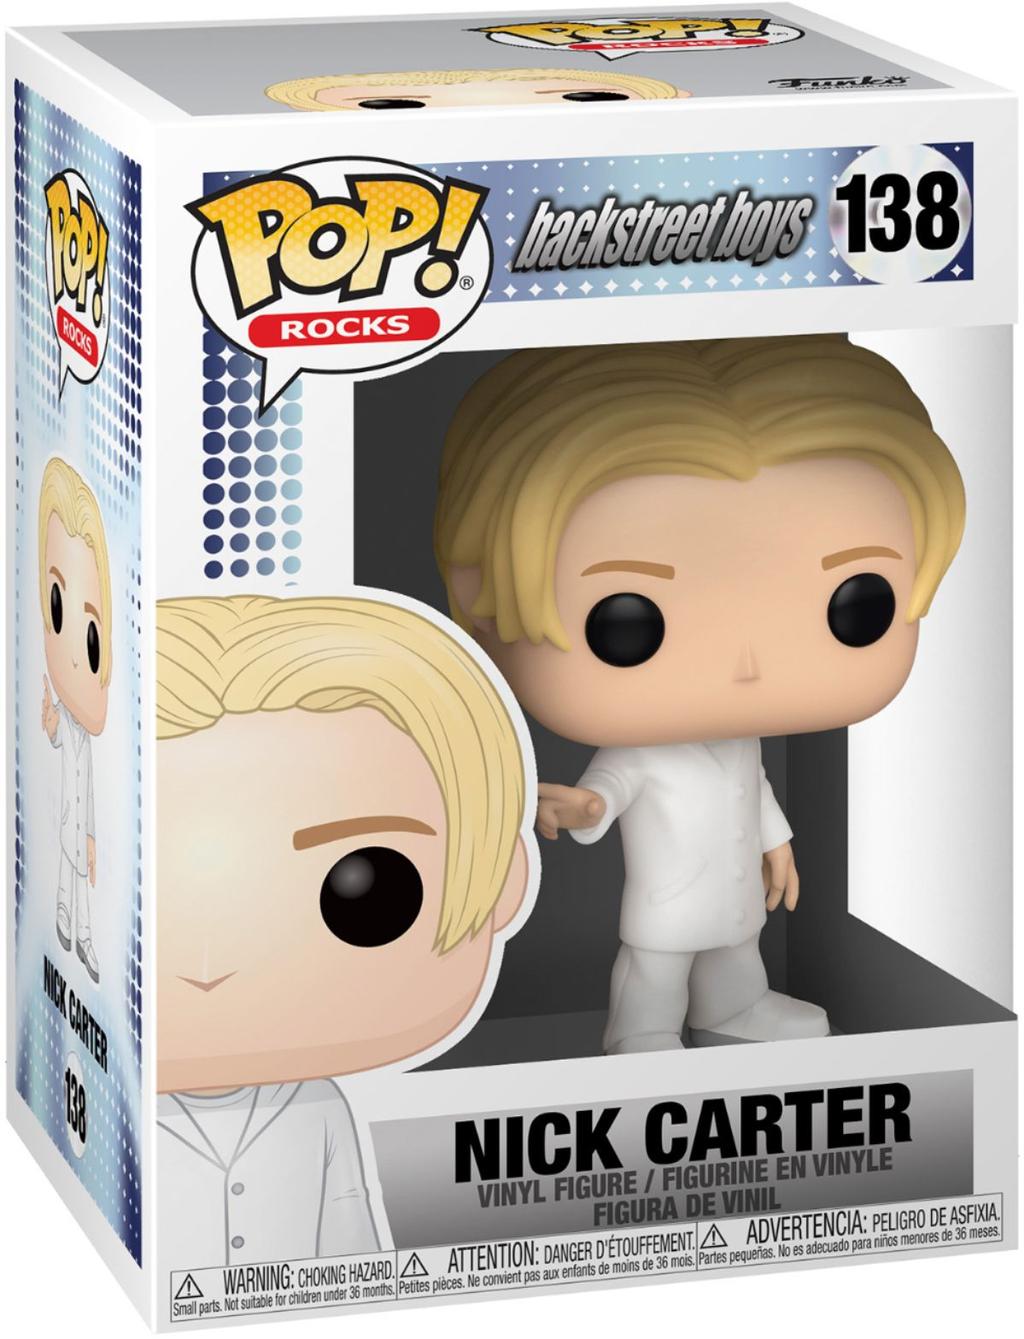 POP Backstreet Boys Nick Carter Main Product  Image width="1000" height="1000"